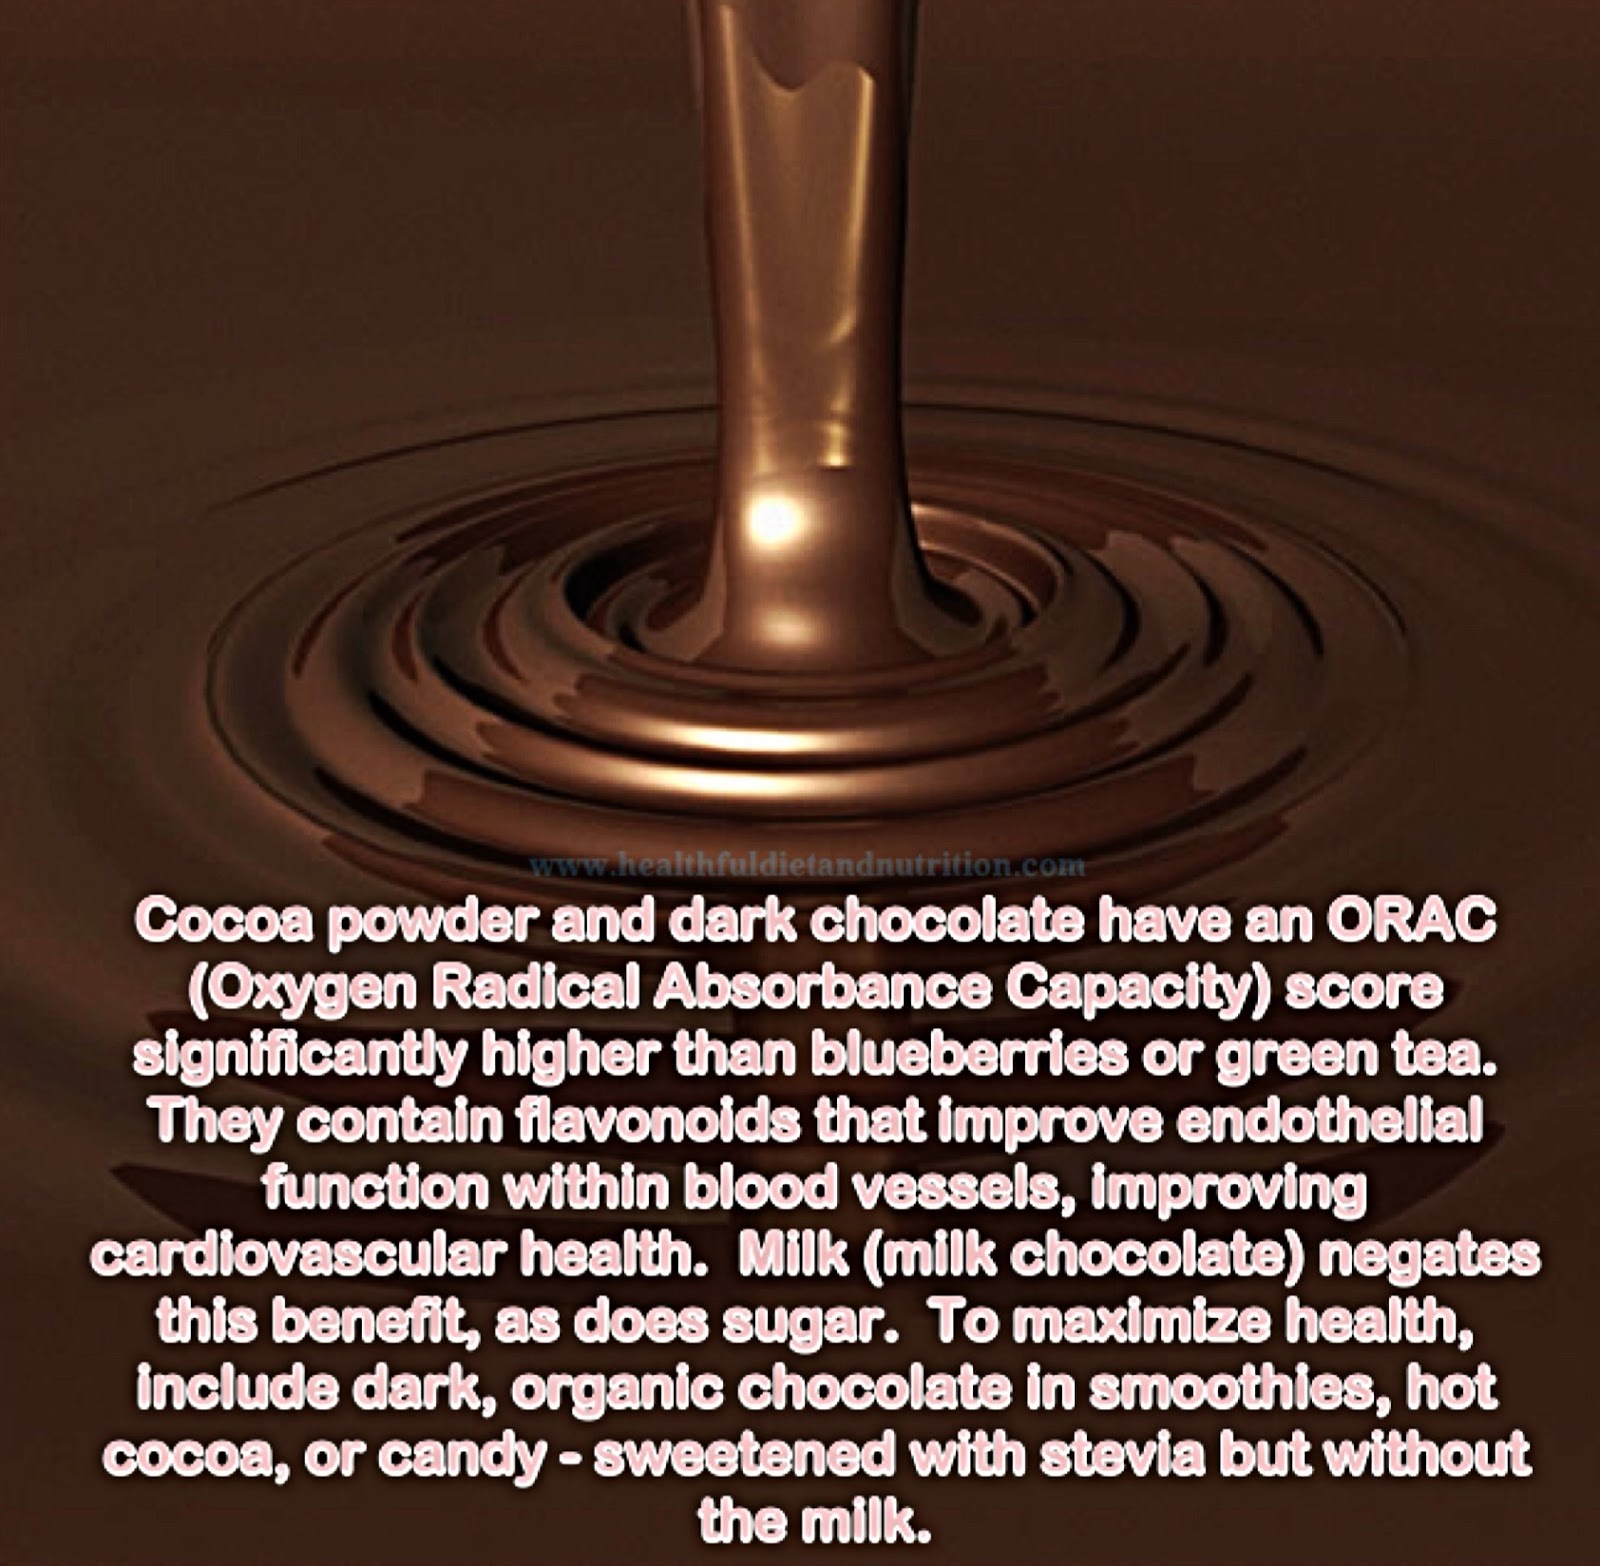 Consume Organic Dark Chocolate To Maximize Health